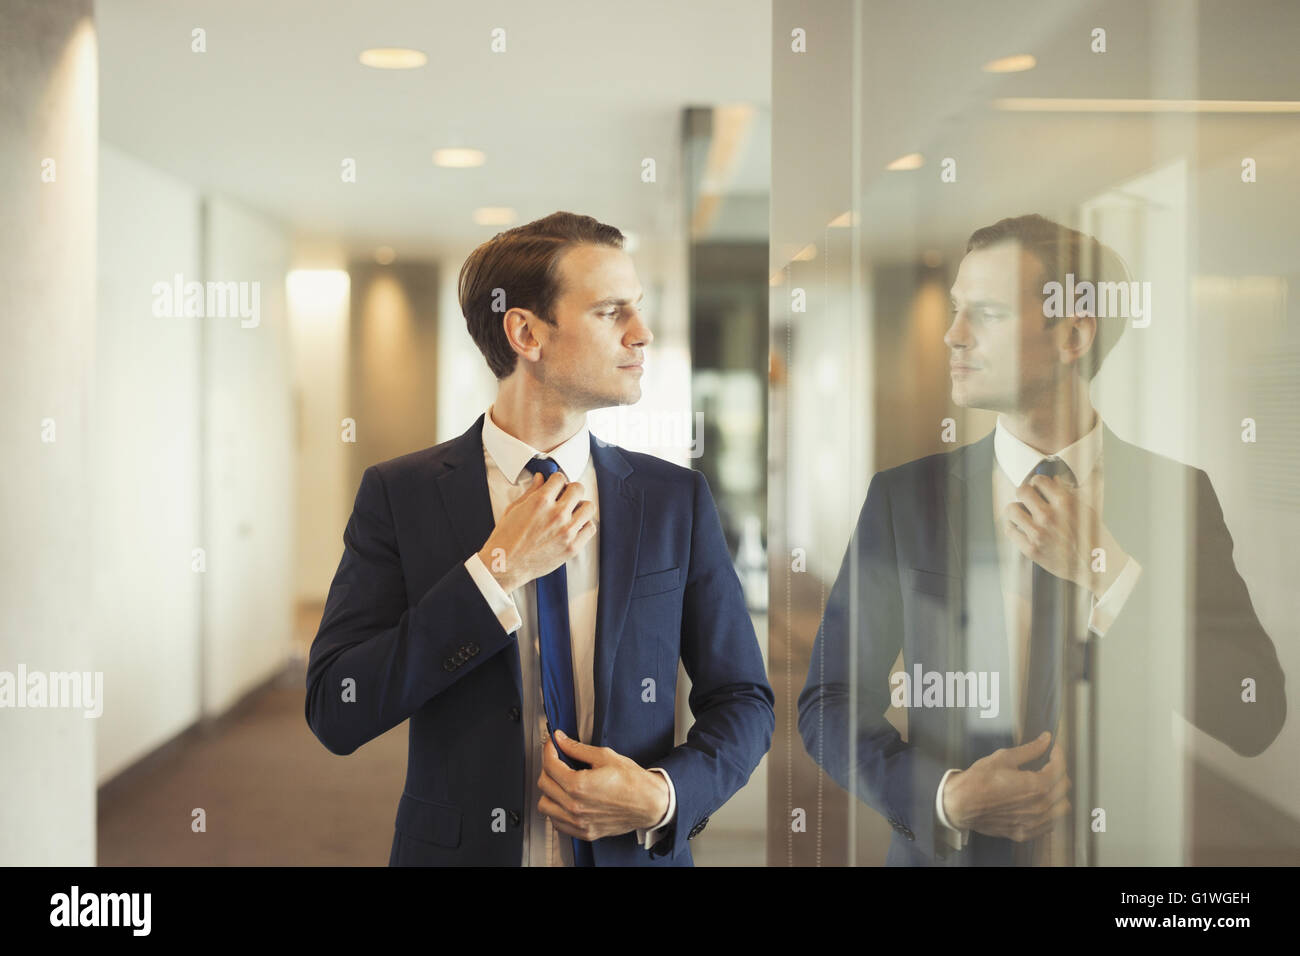 Confident businessman adjusting tie in office corridor Stock Photo